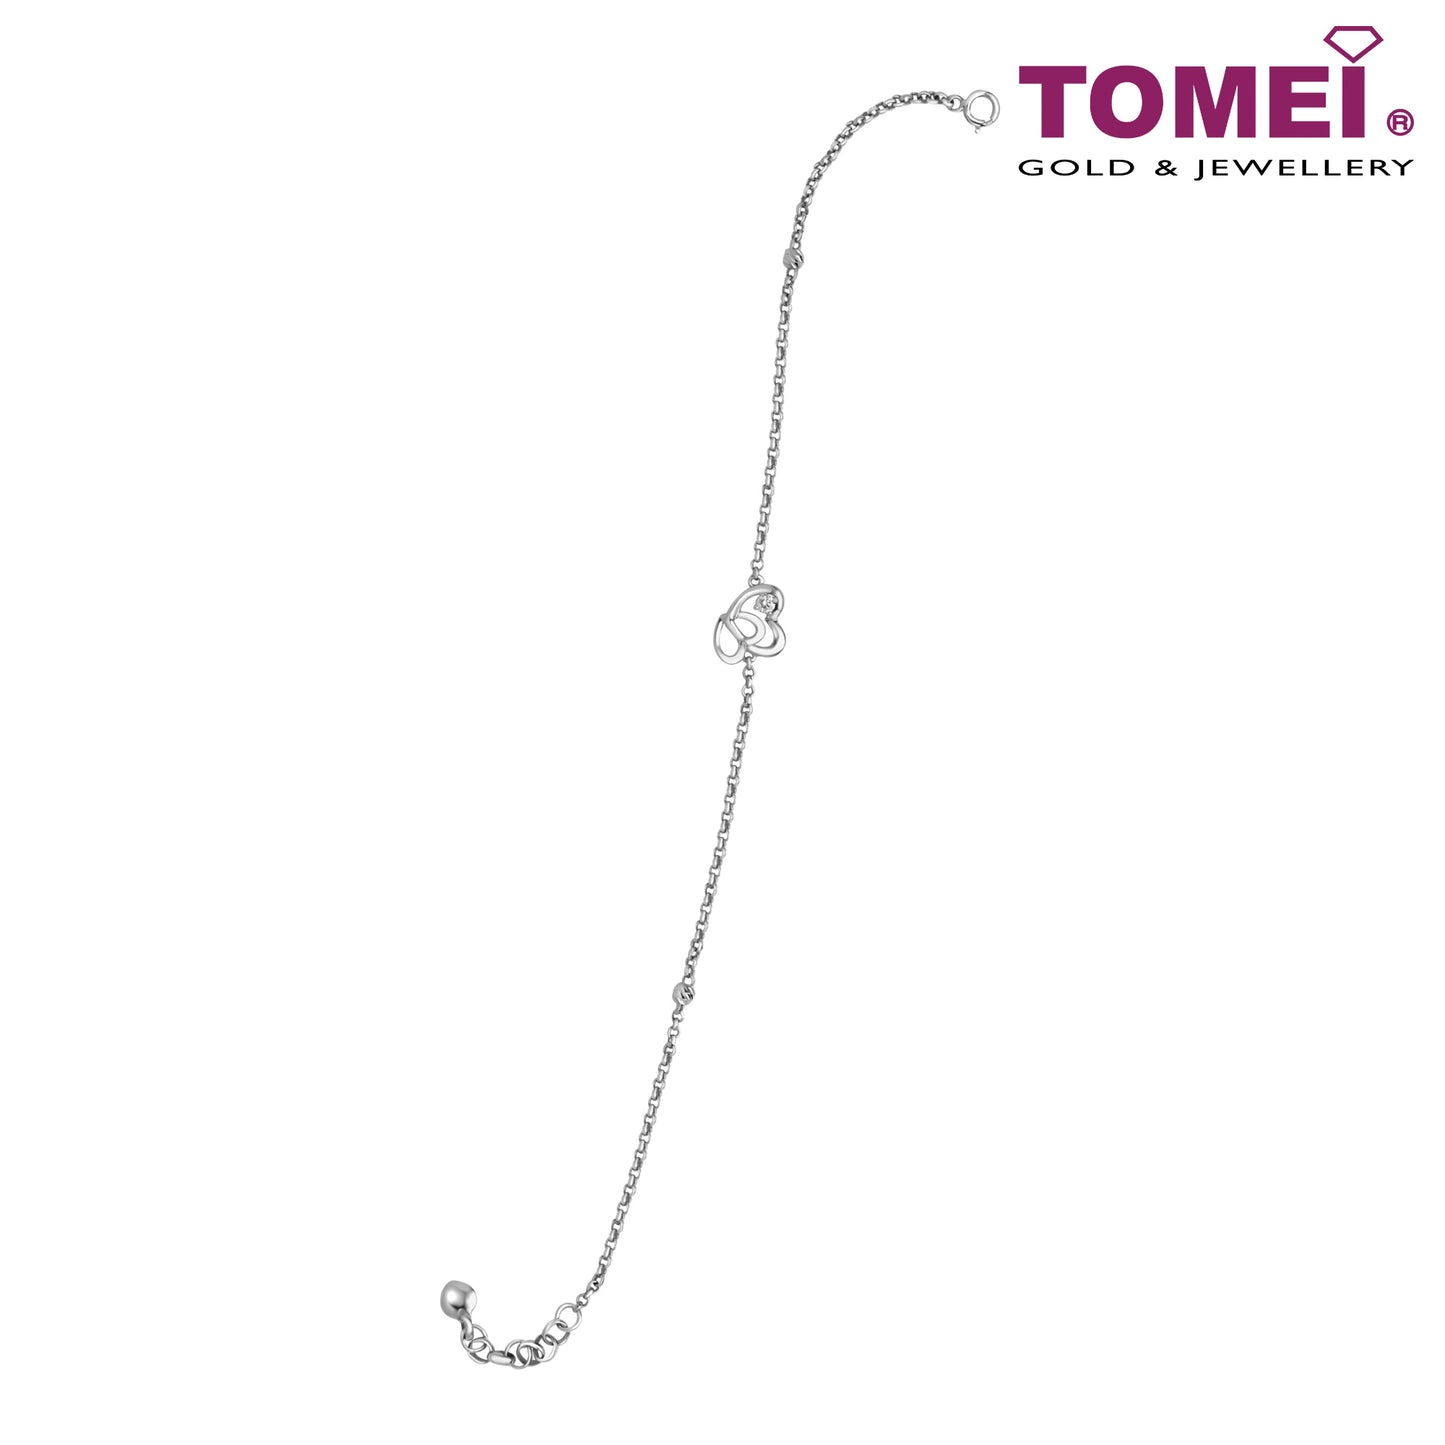 TOMEI Entwined Heart Bracelet I Diamond White Gold 375 (B0976)